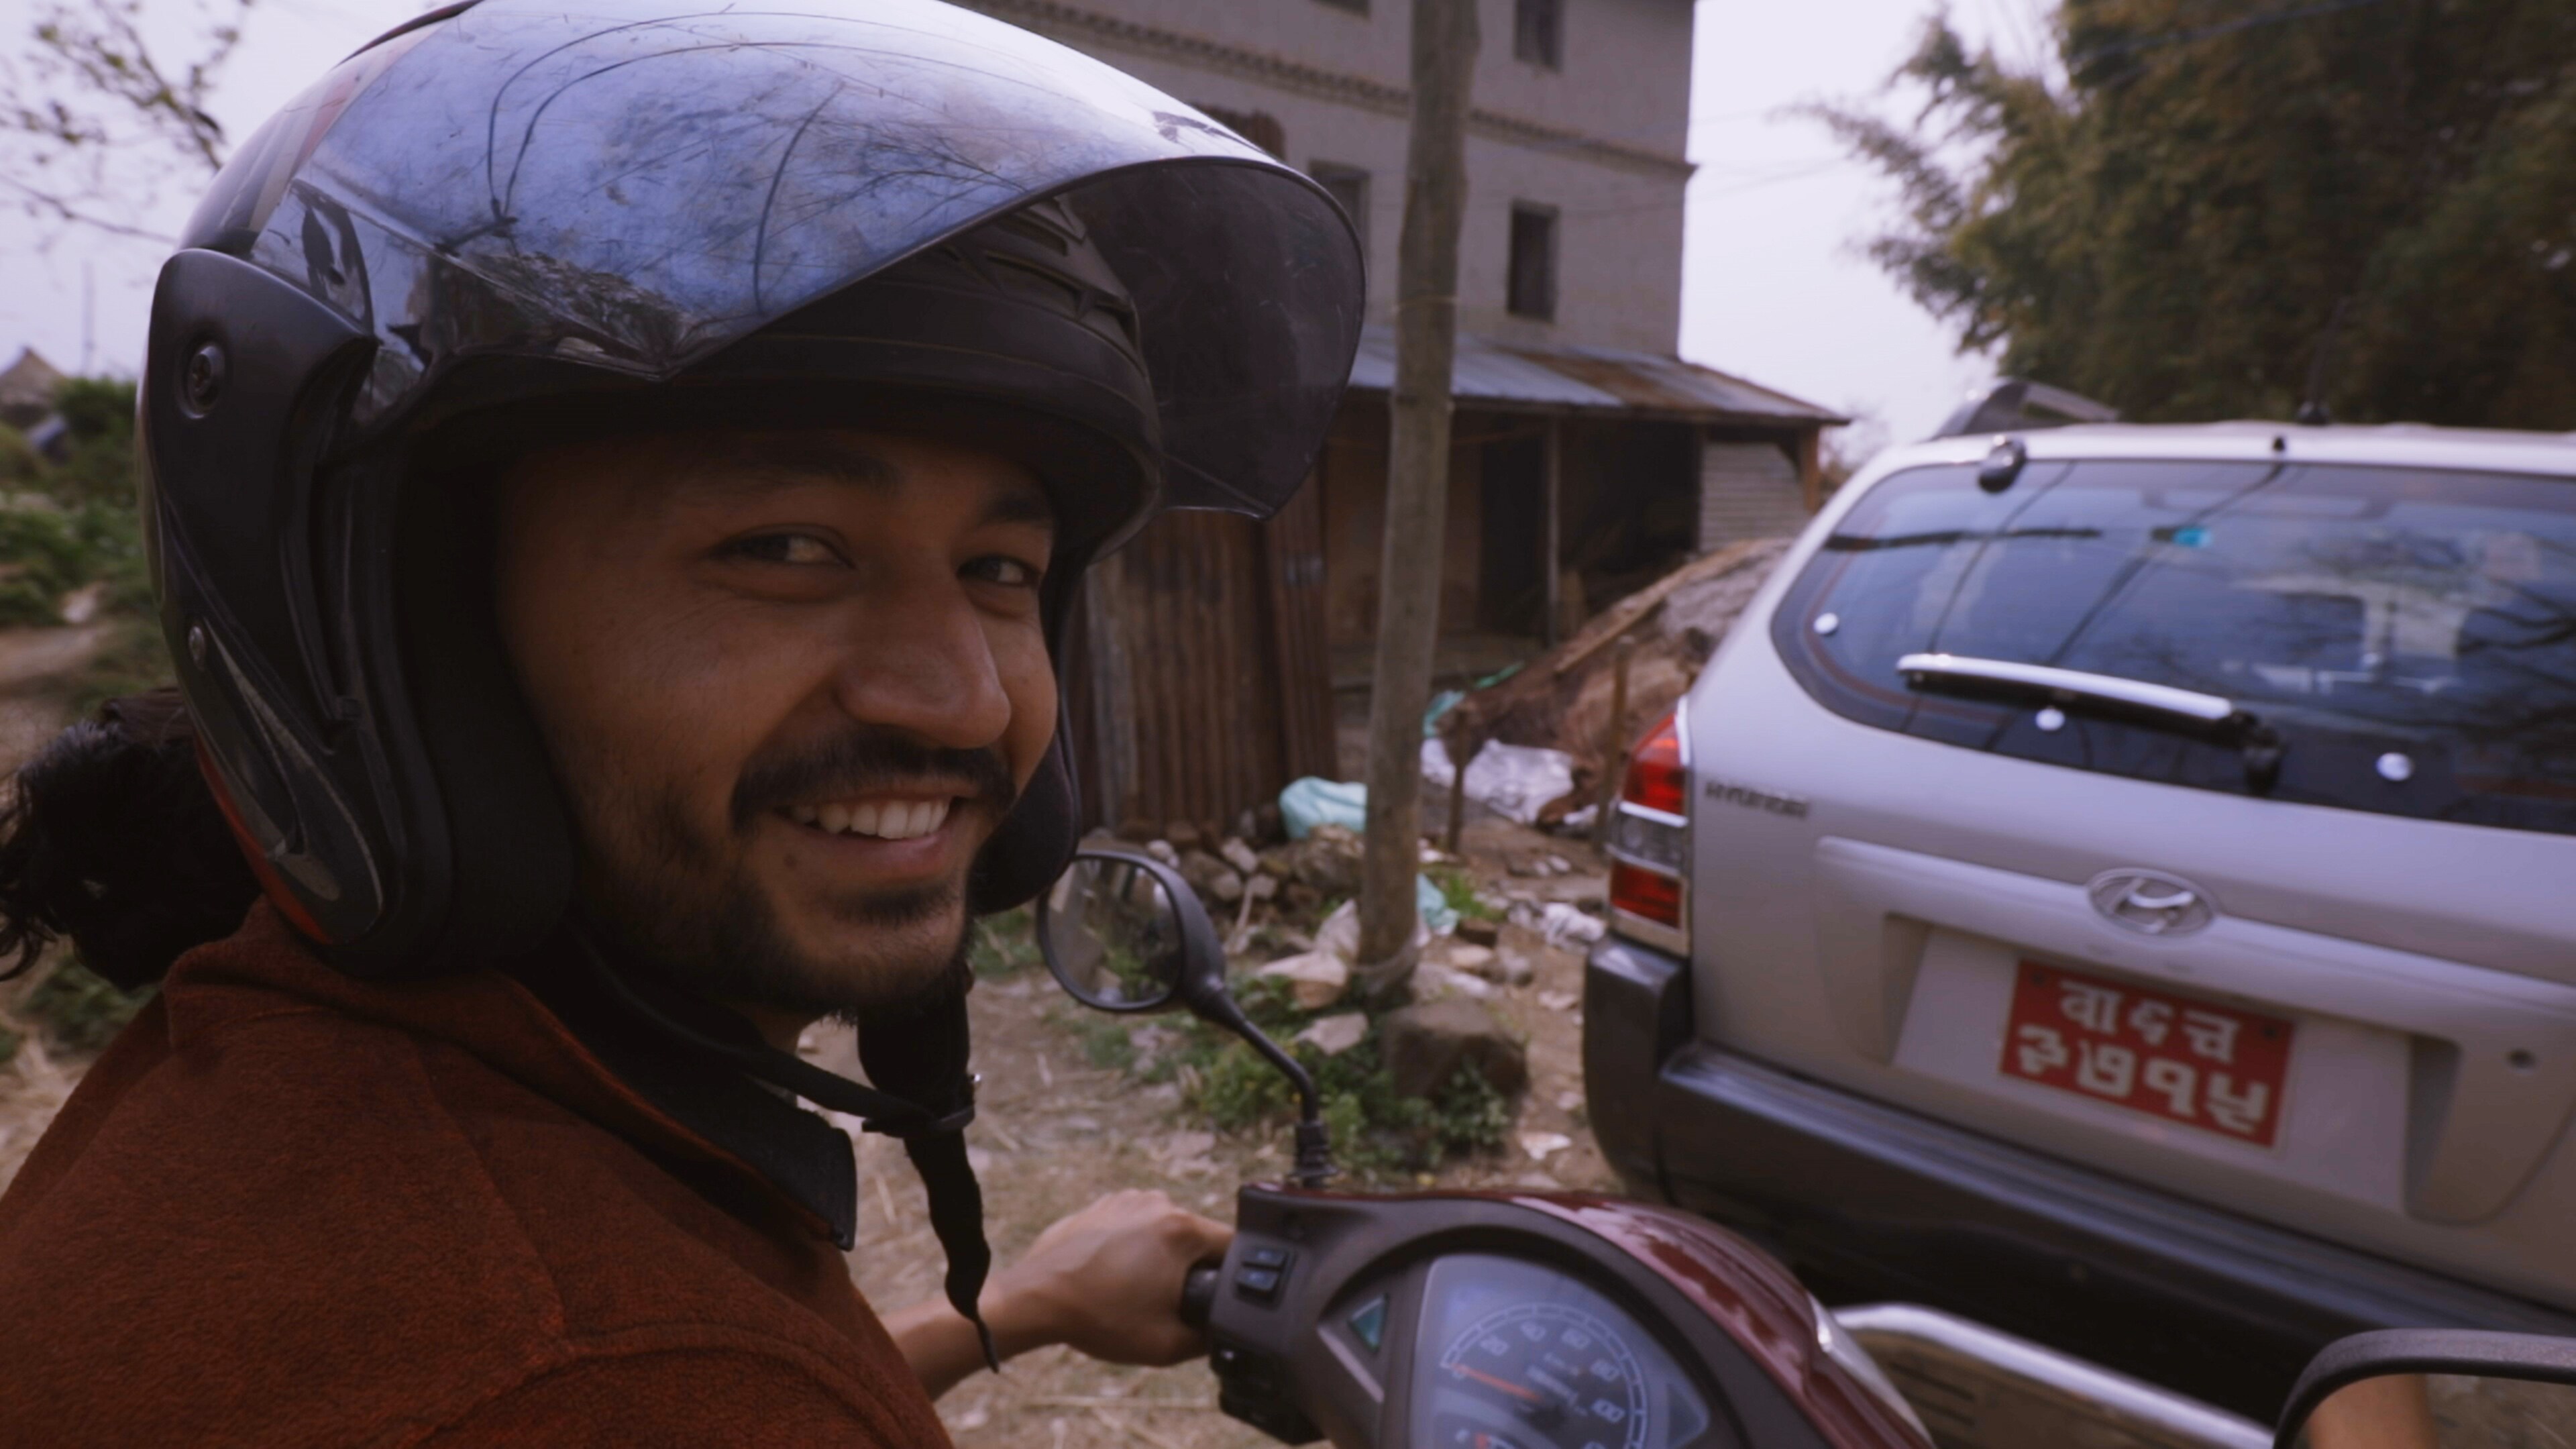 Bhaktapur, Nepal - Santosh Pandey rides a motorcycle through his hometown of Bhaktapur, Nepa. (Credit: Future of Work Film Inc)